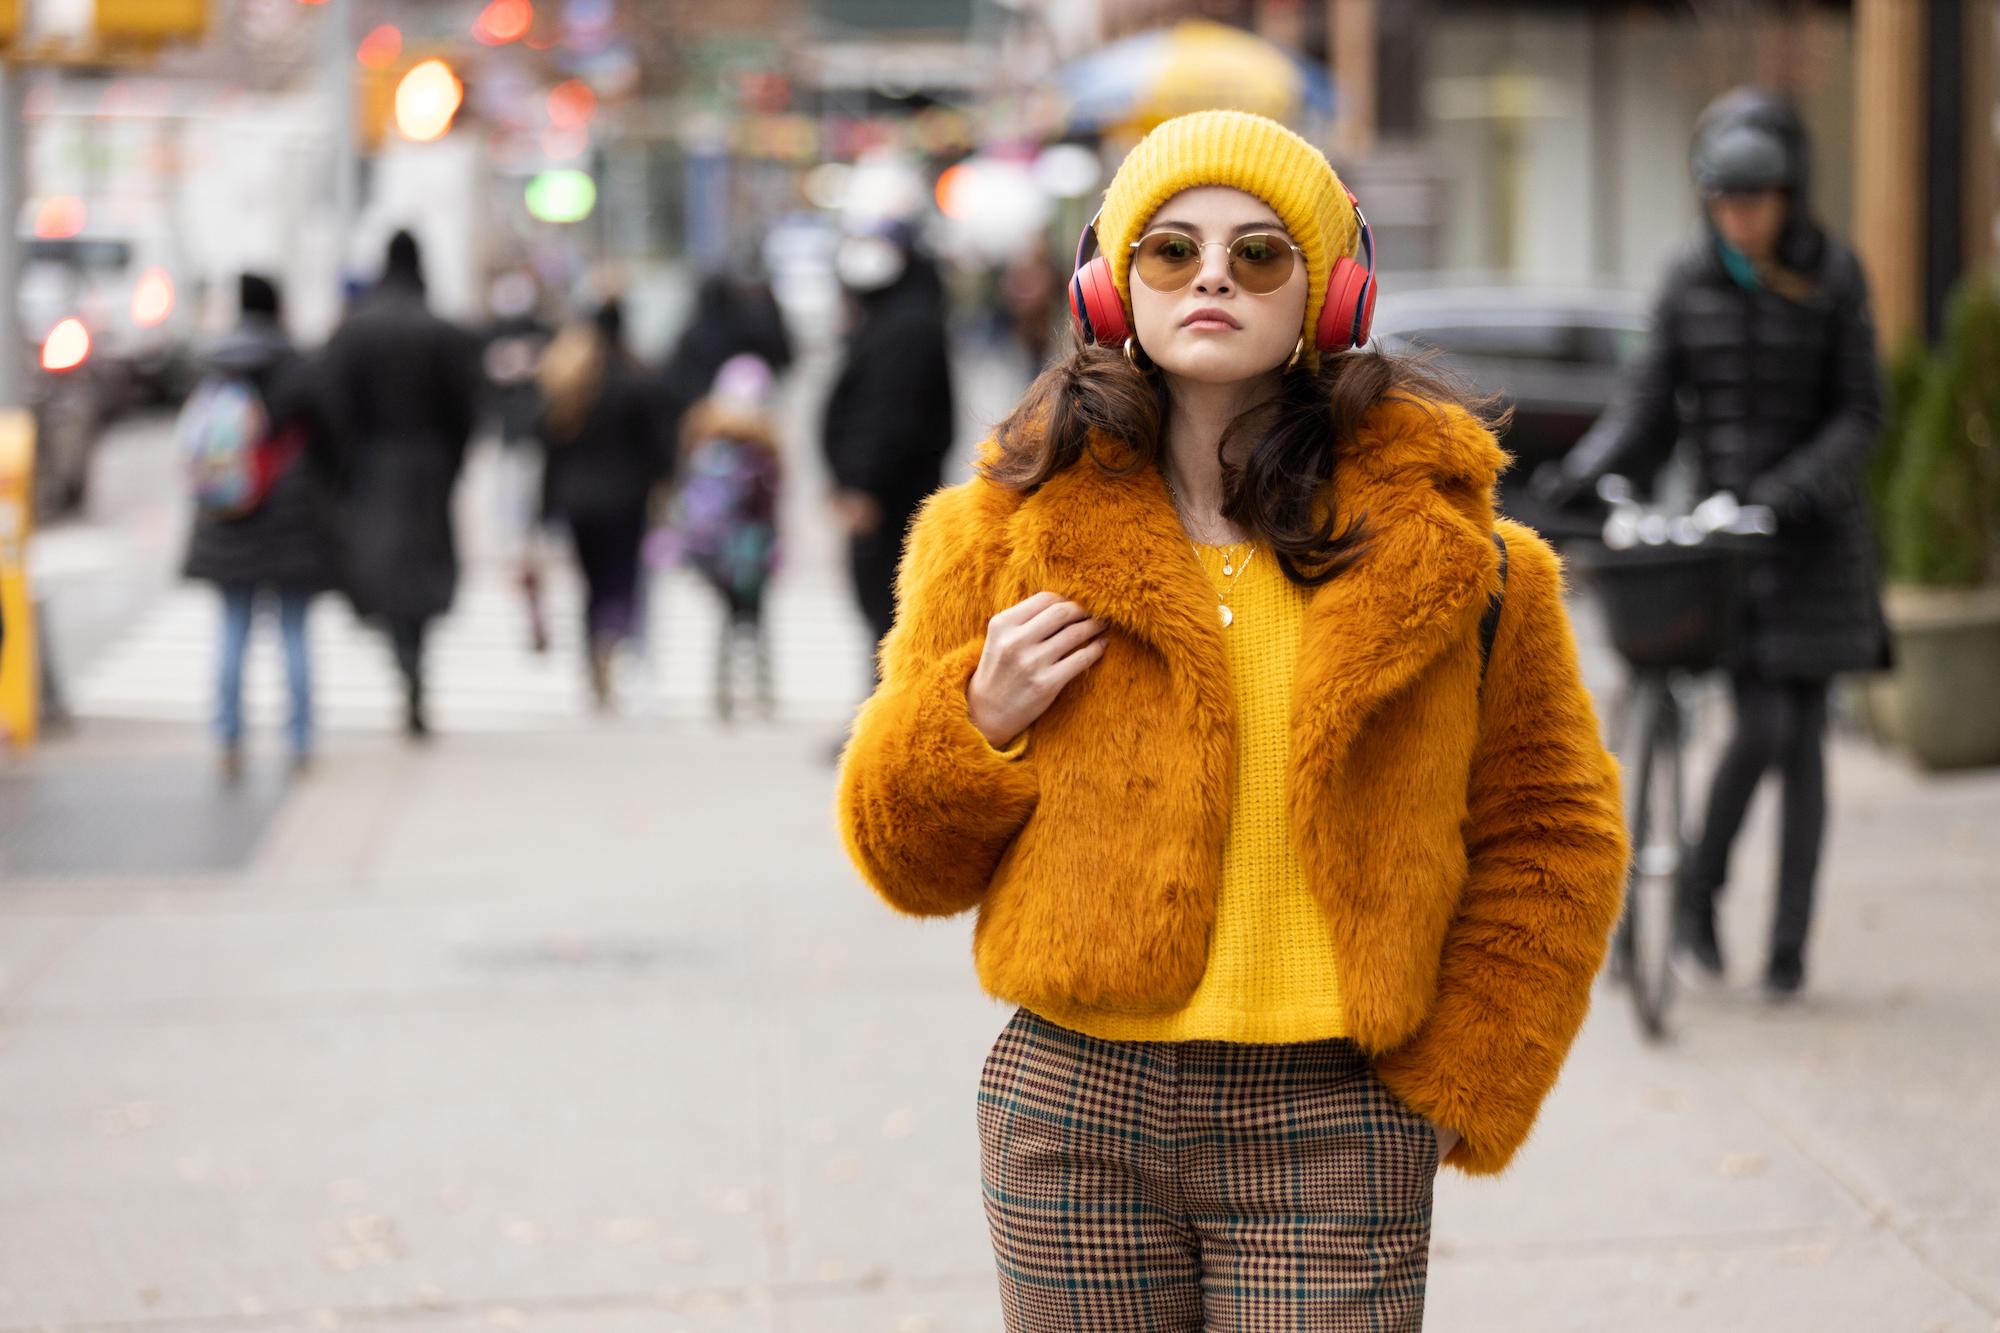 Selena Gomez walks down the street wearing headphones